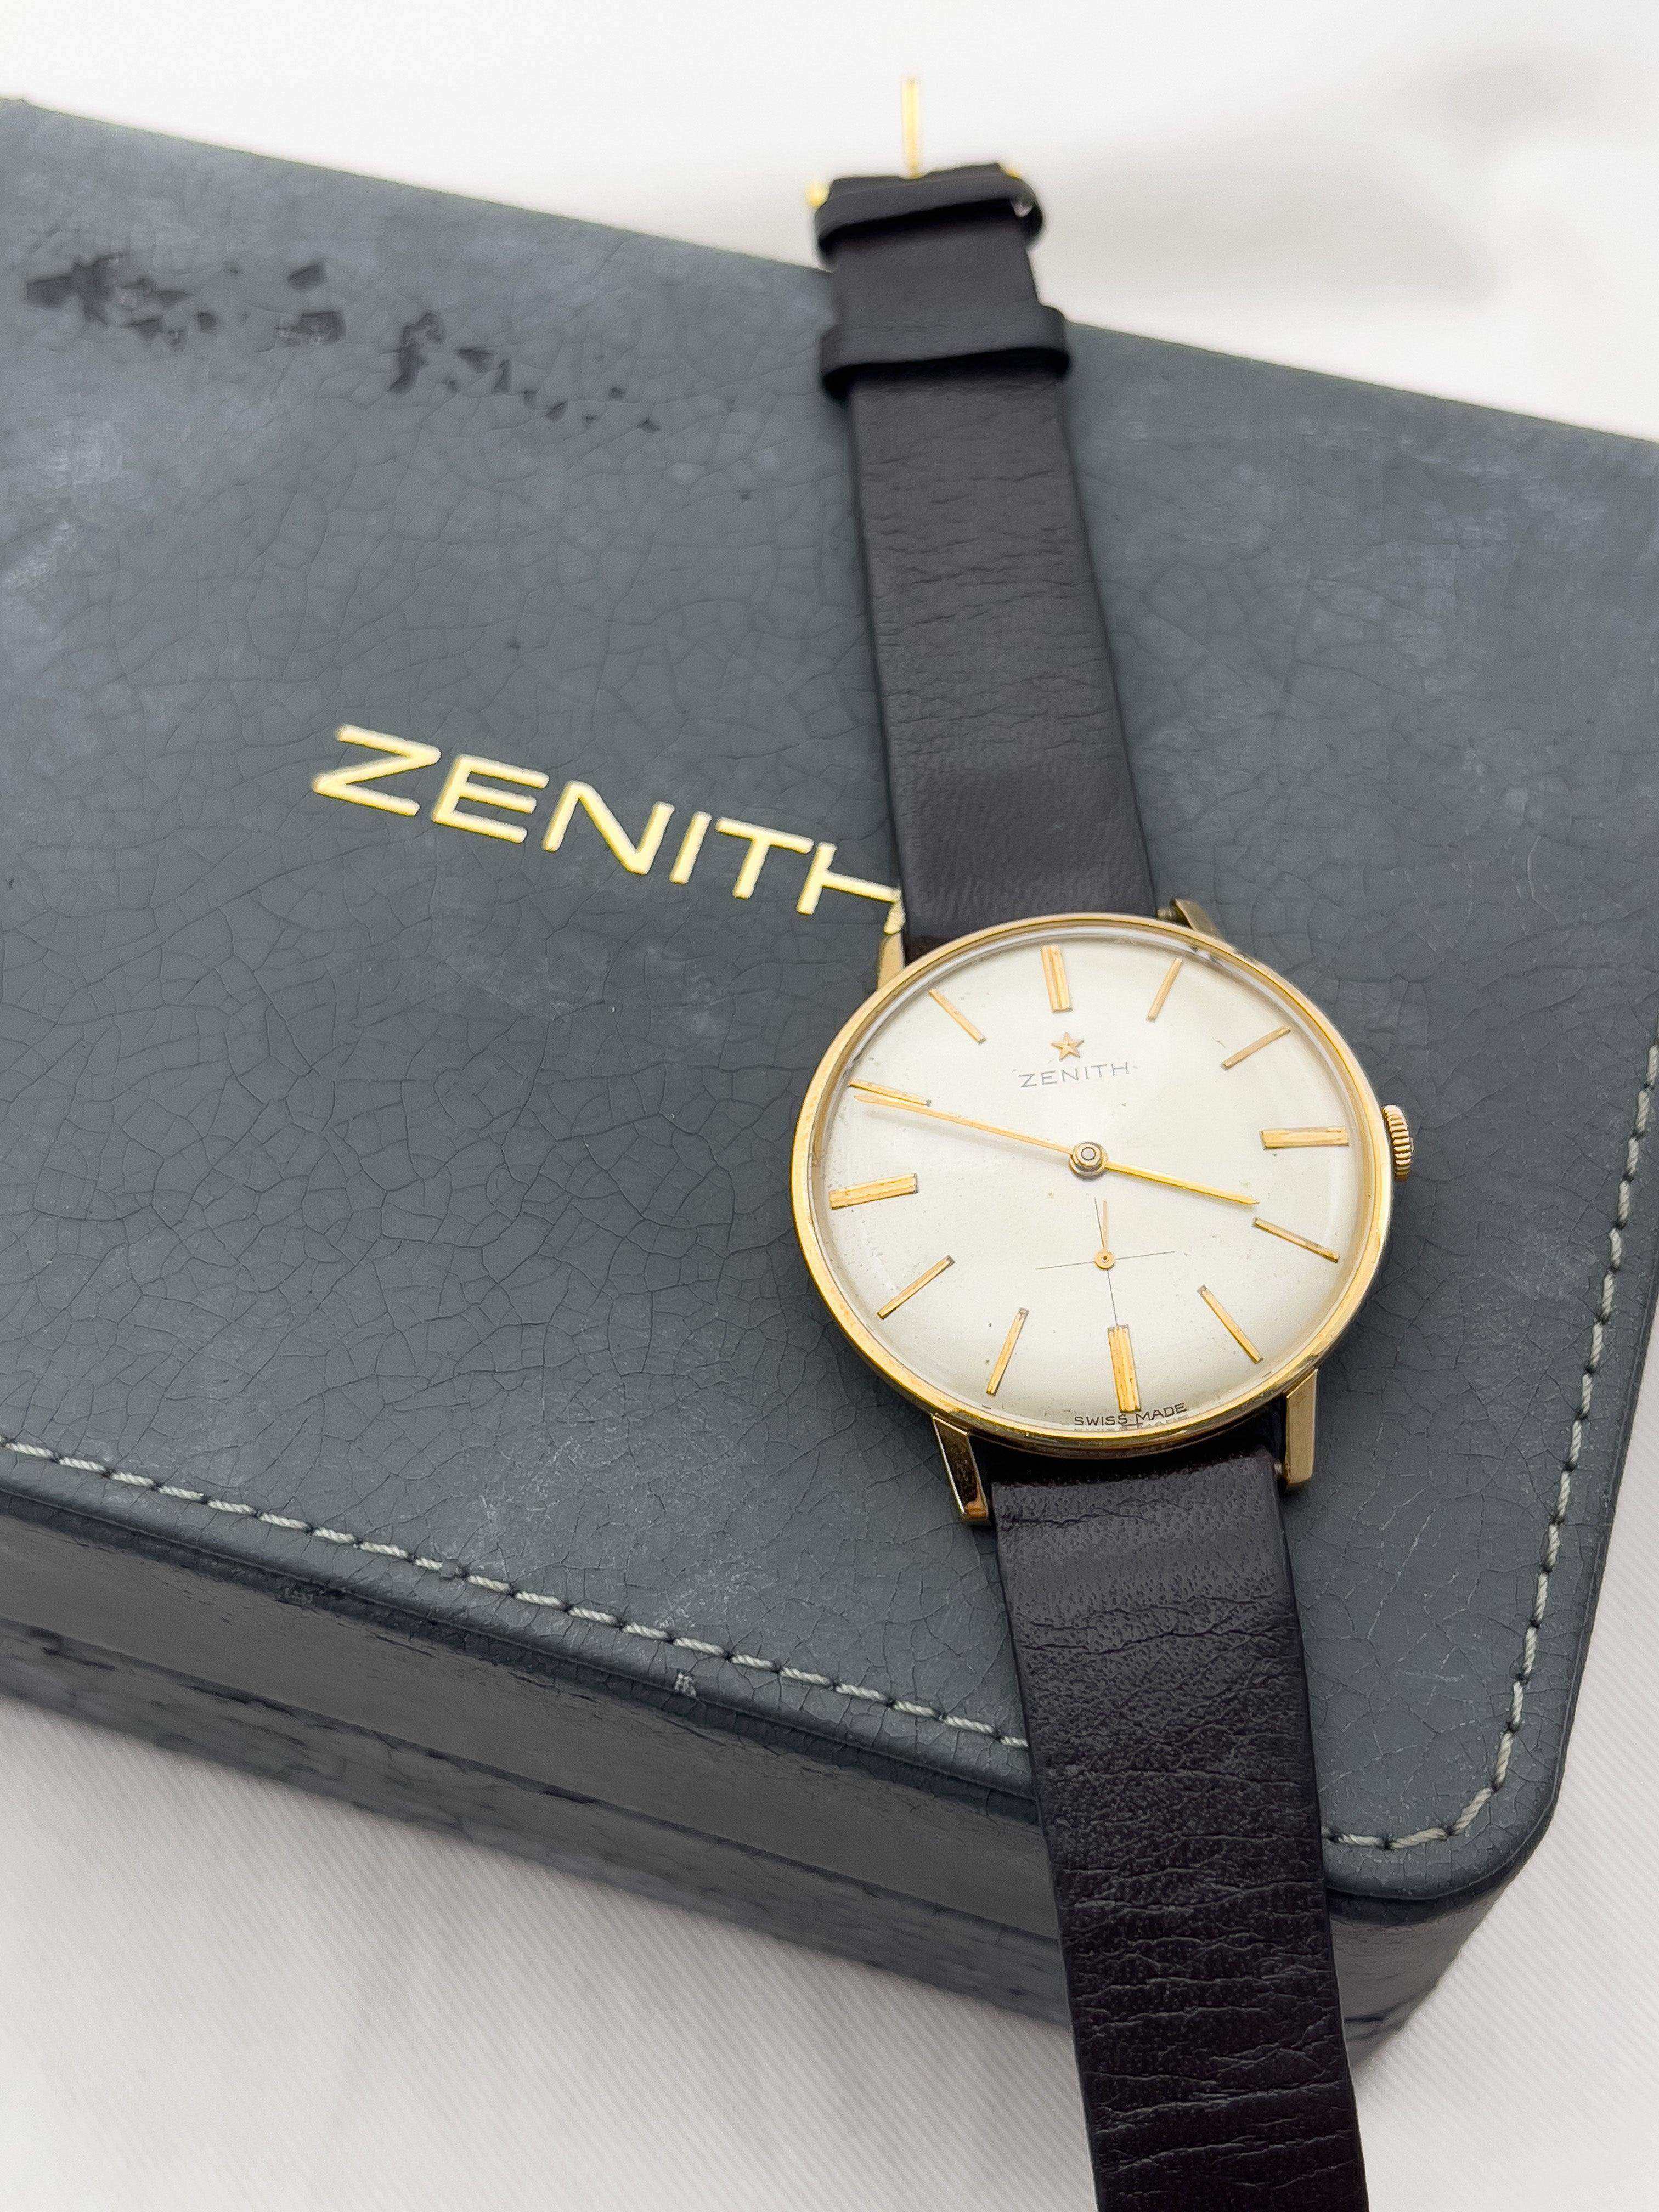 Zenith - Stellina 18k Gold - BOX - 1960’s - Atelier Victor